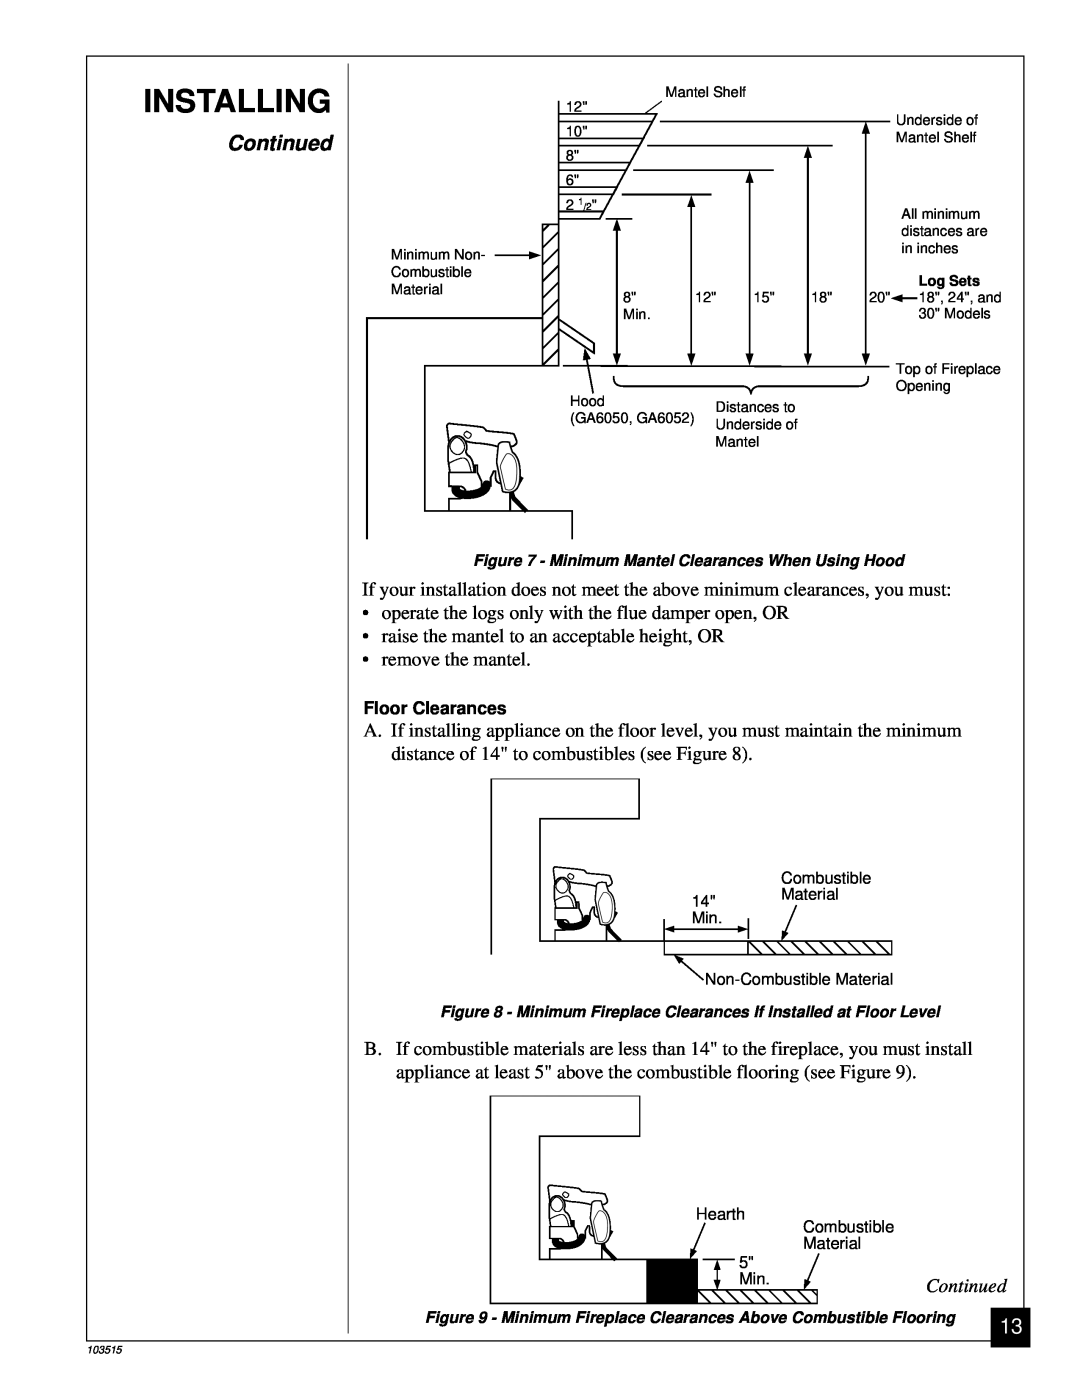 Vanguard Heating Gas Log Heater installation manual Installing, Continued 